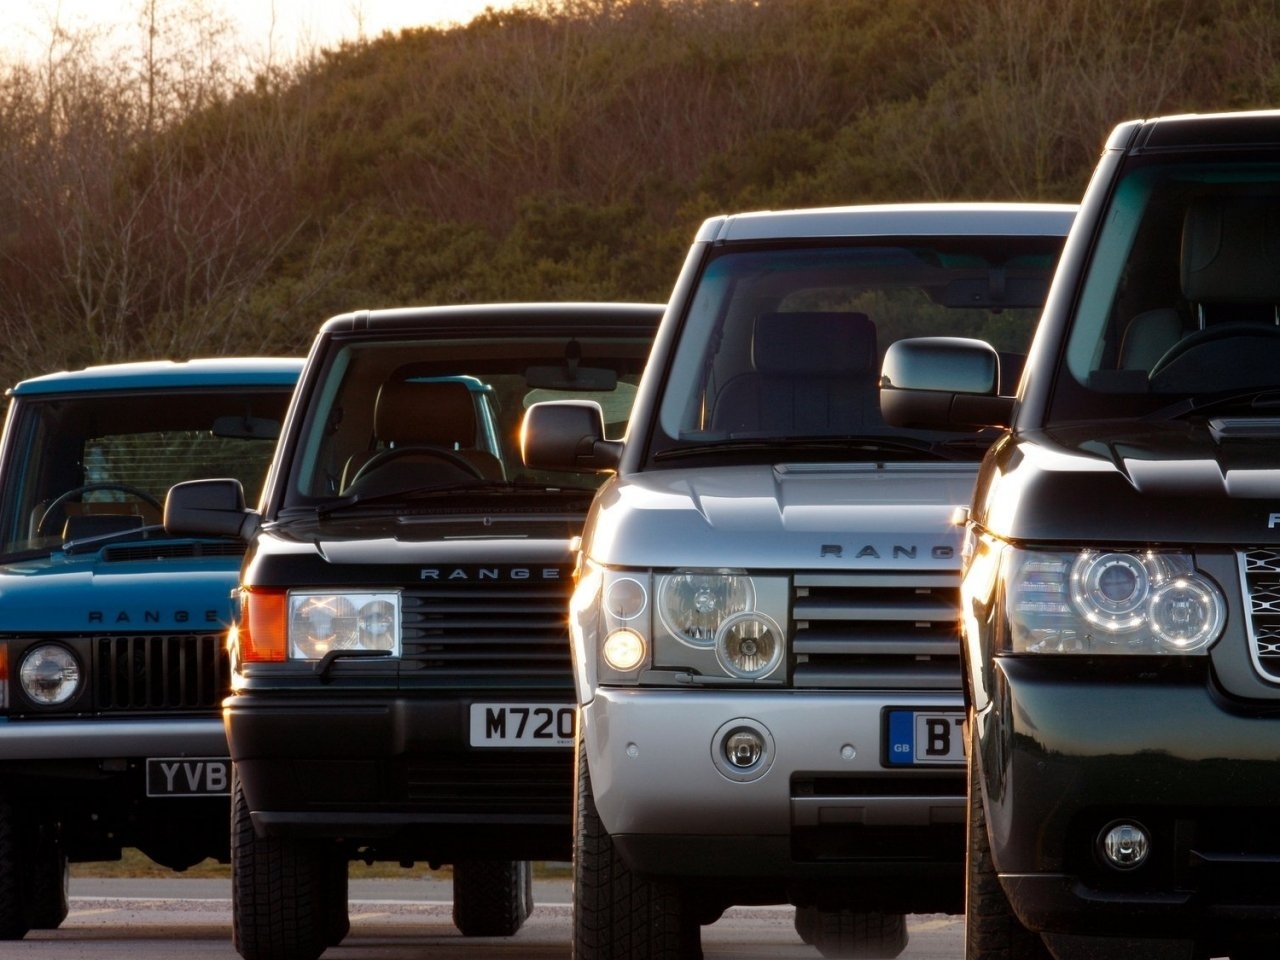 Descarga gratuita de fondo de pantalla para móvil de Automóvil, Range Rover, Transporte.